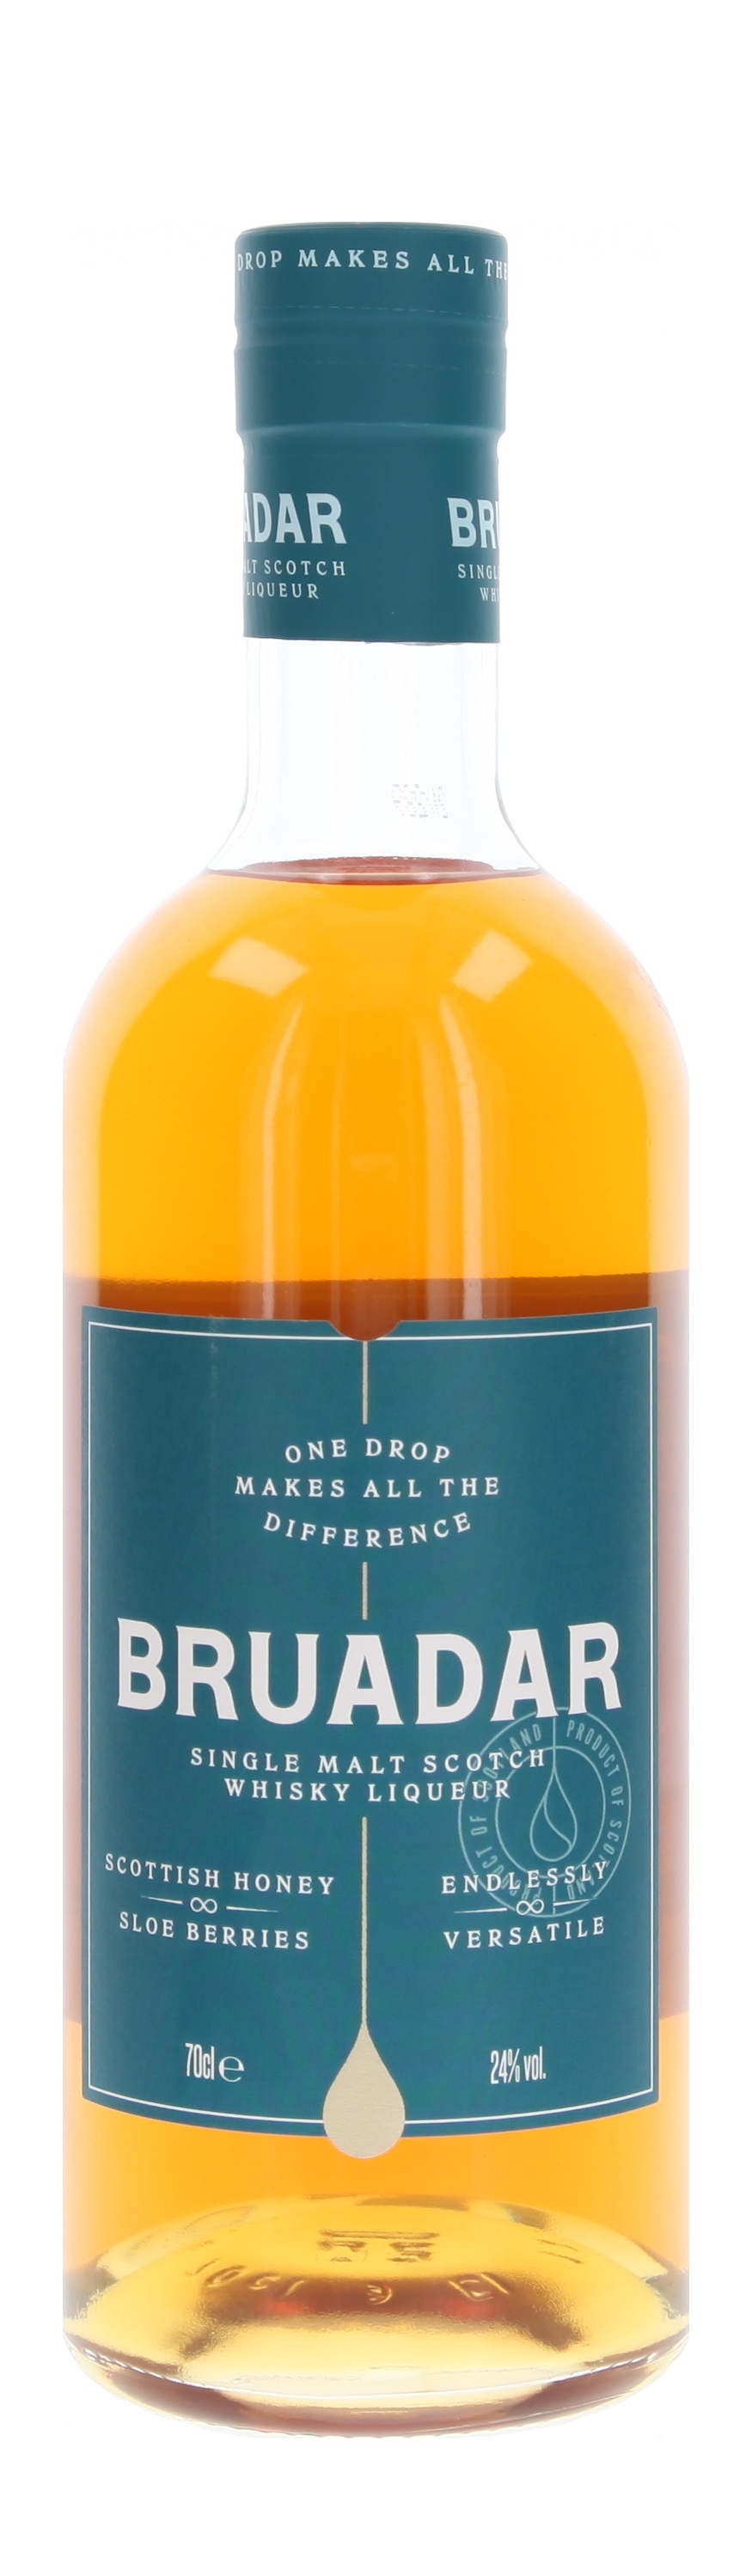 Bruadar » | the Austria online store To Whisky.de